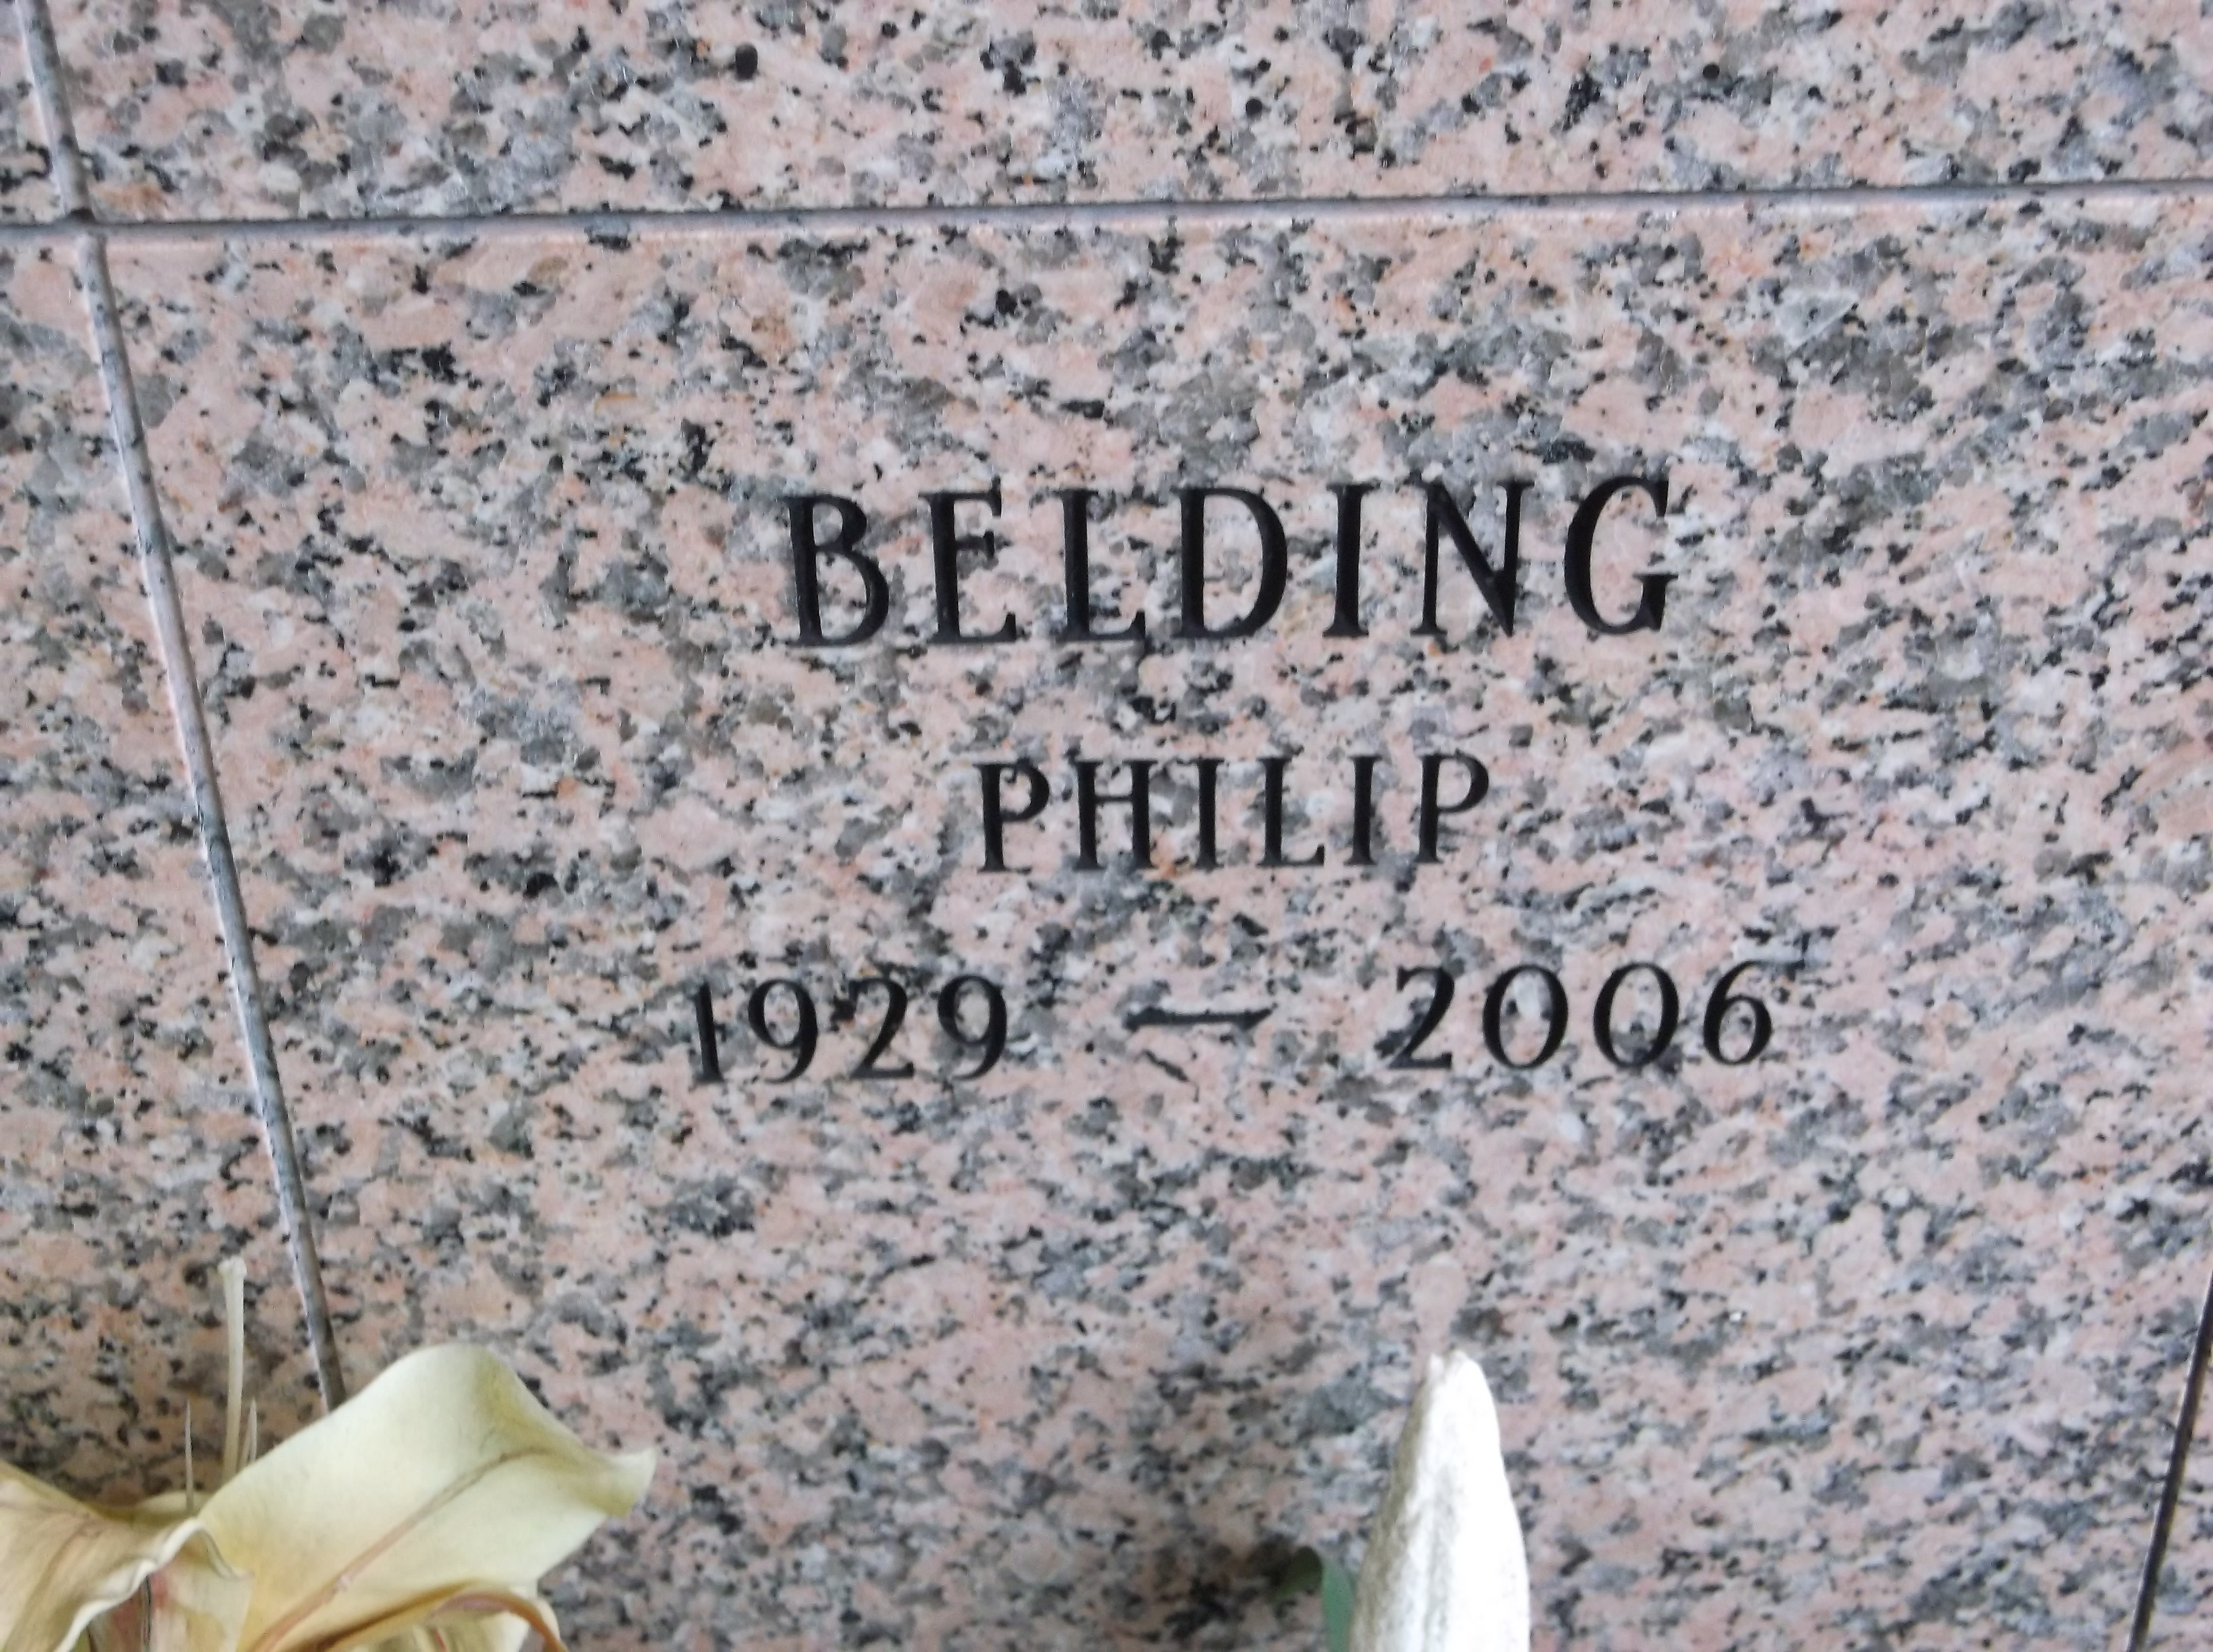 Philip Belding